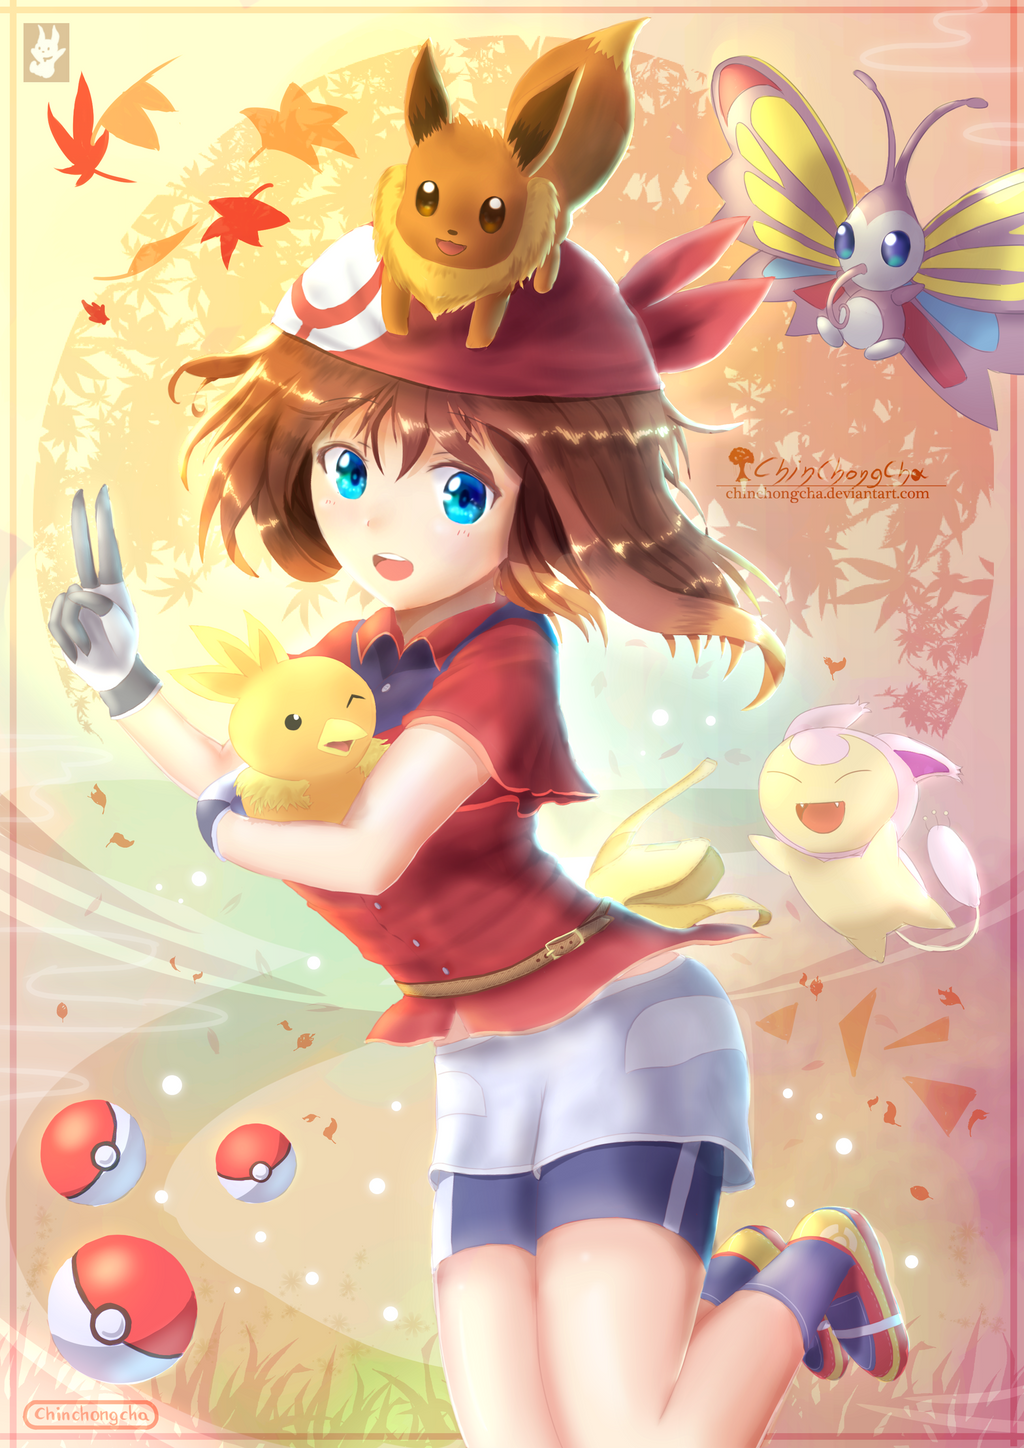 Anime Pokémon Picture by chinchongcha